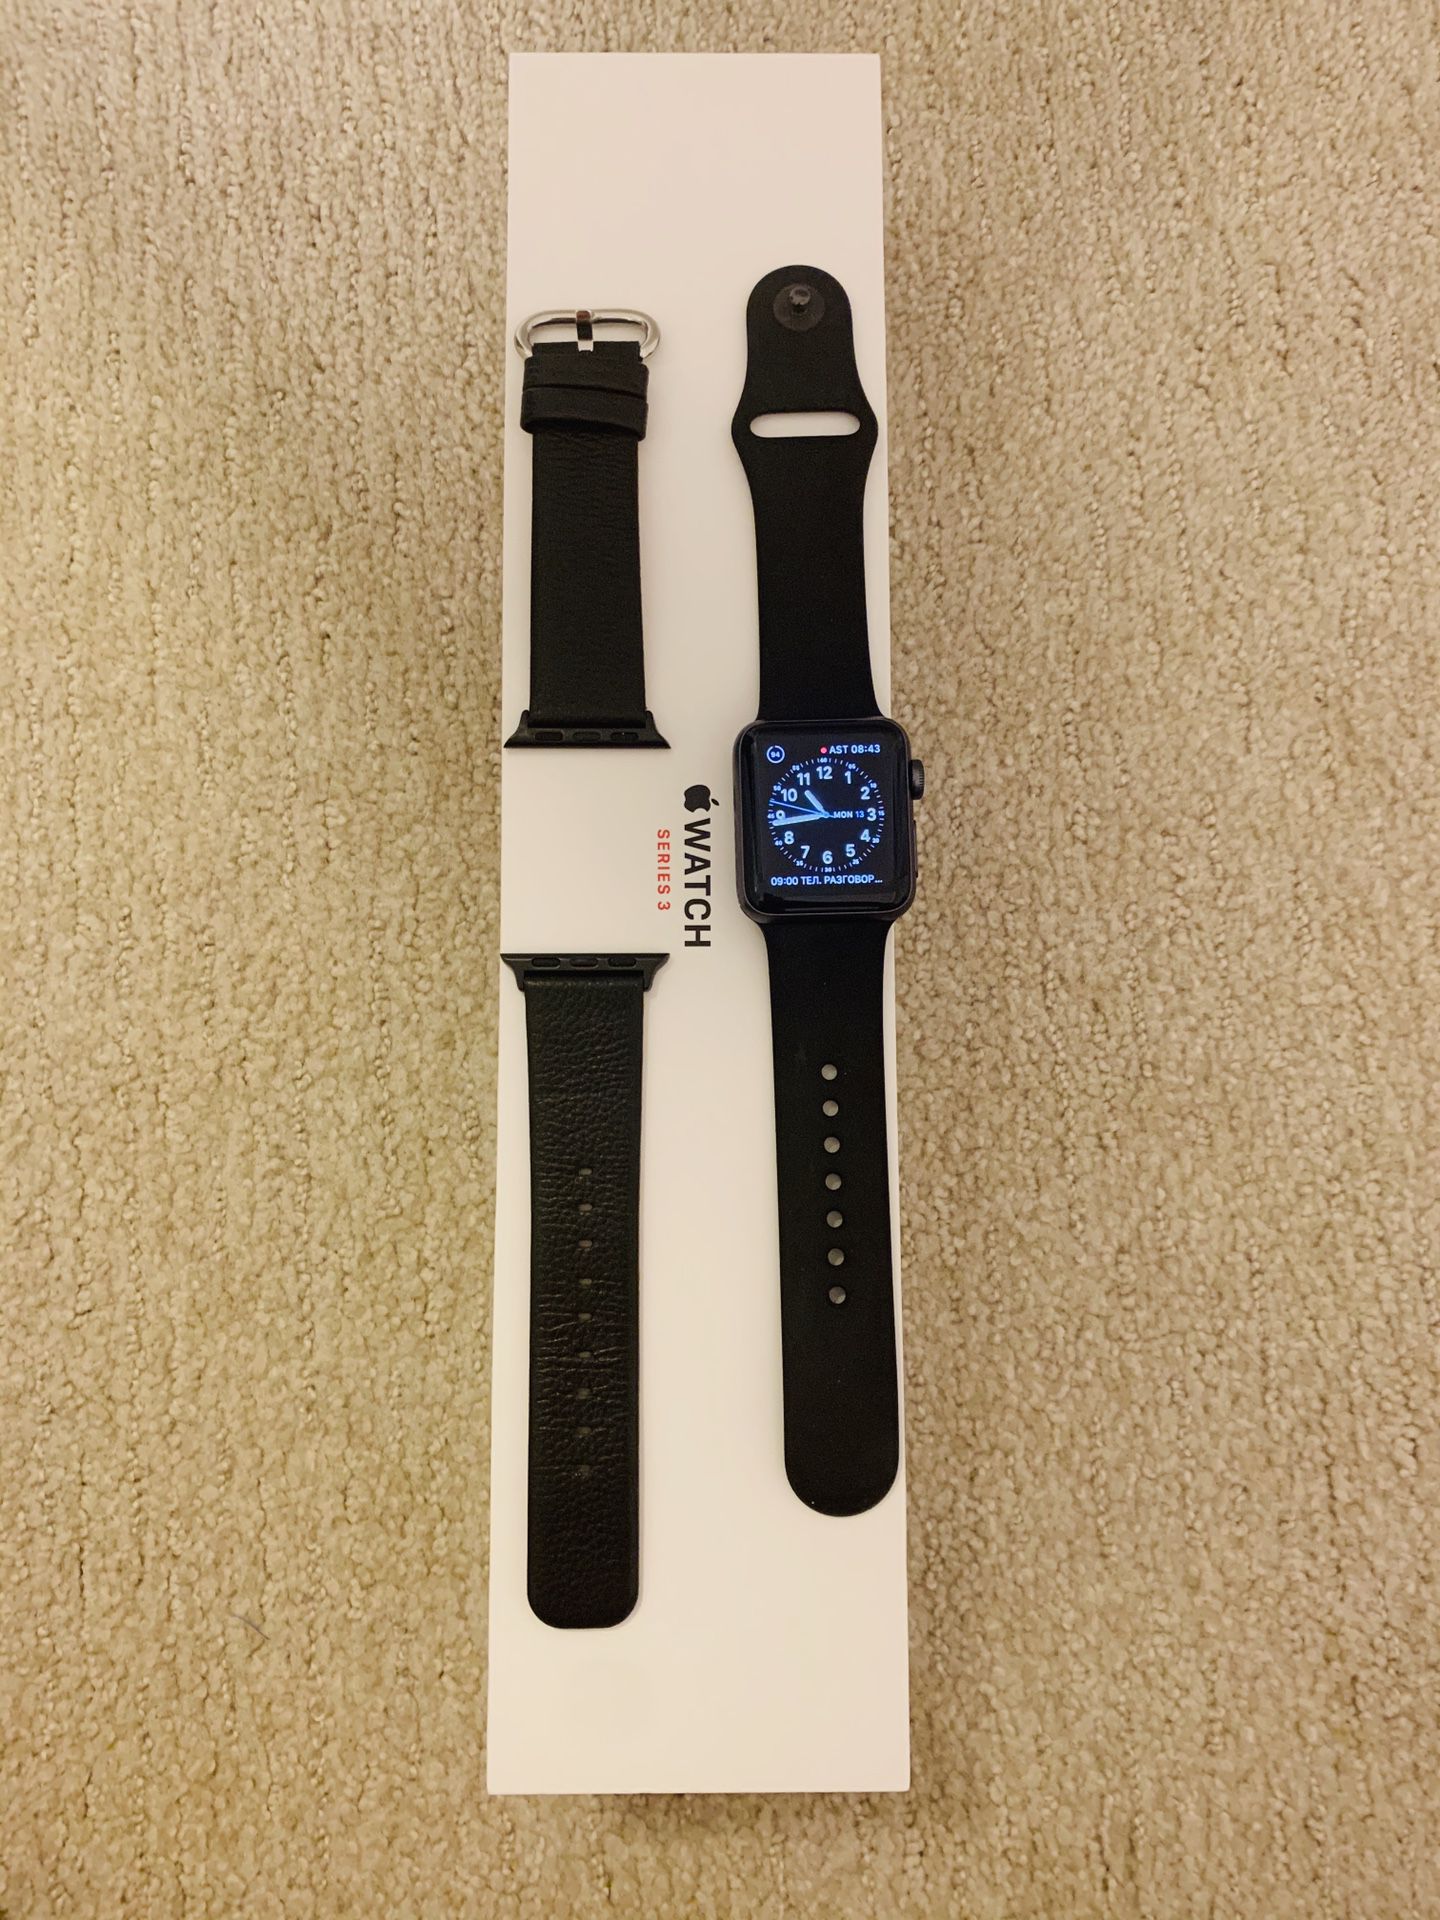 Apple Watch Series 3 + Cellular (38 mm, Space Grey Aluminum)